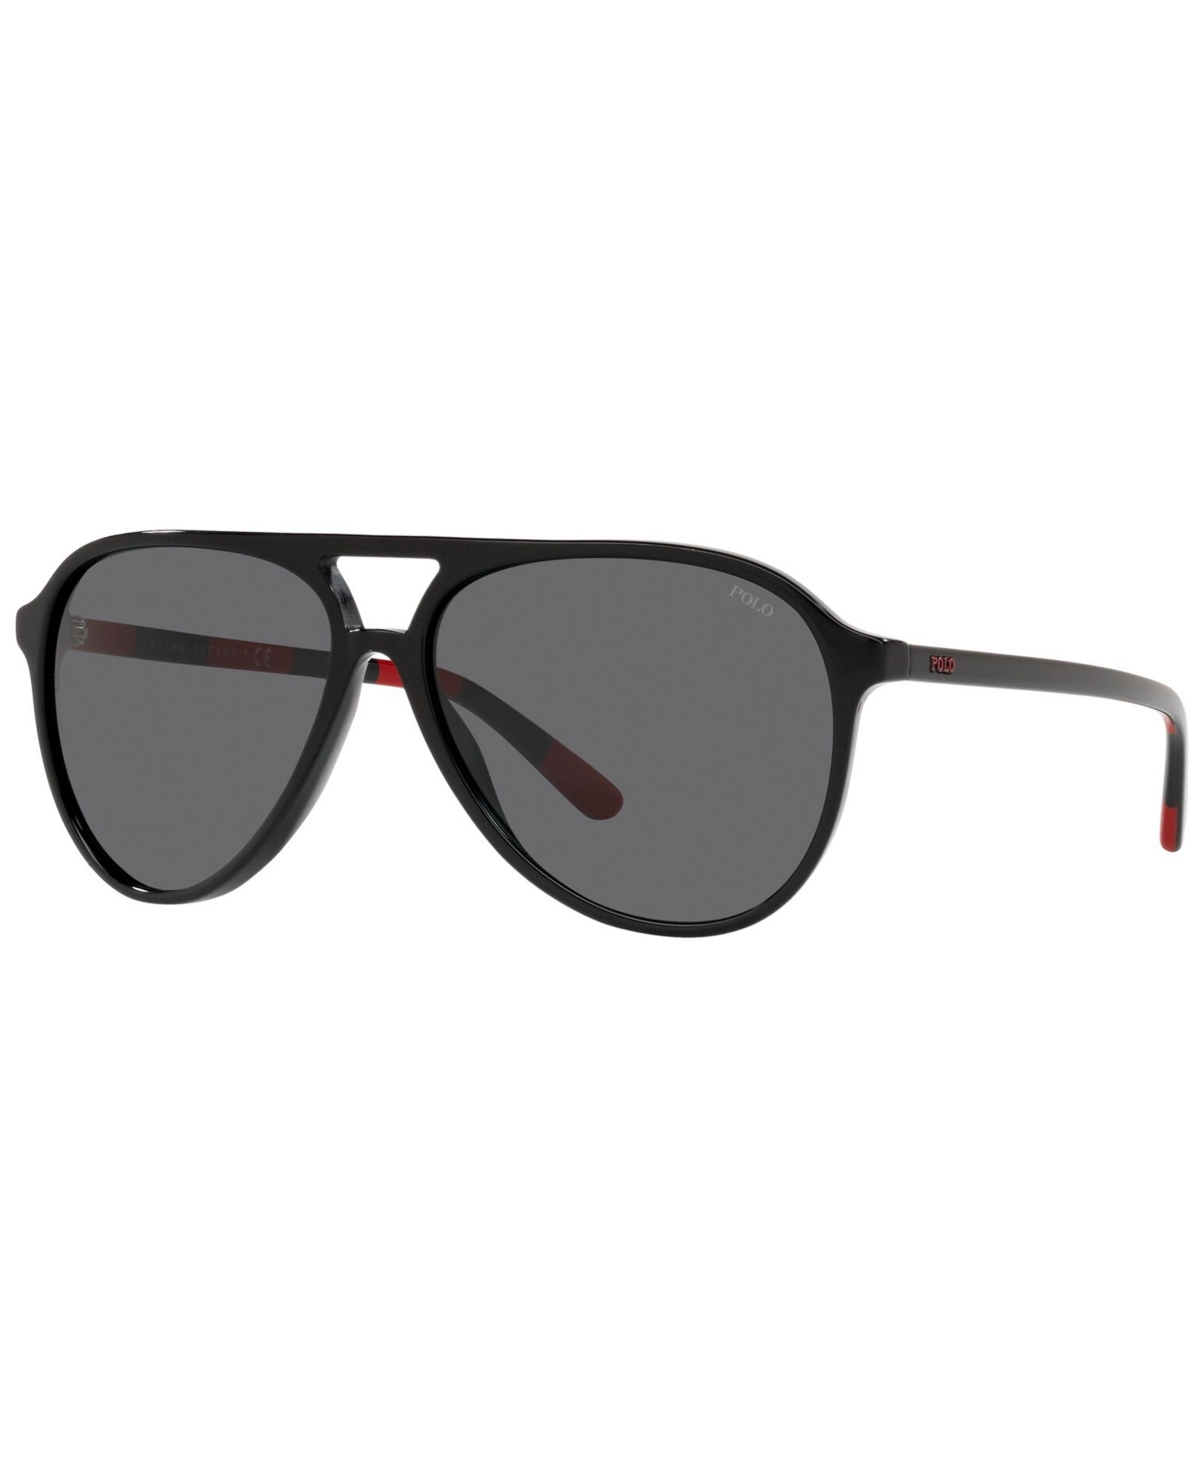 Polo Ralph Lauren Men's Sunglasses, Ph4173 In Shiny Black,grey